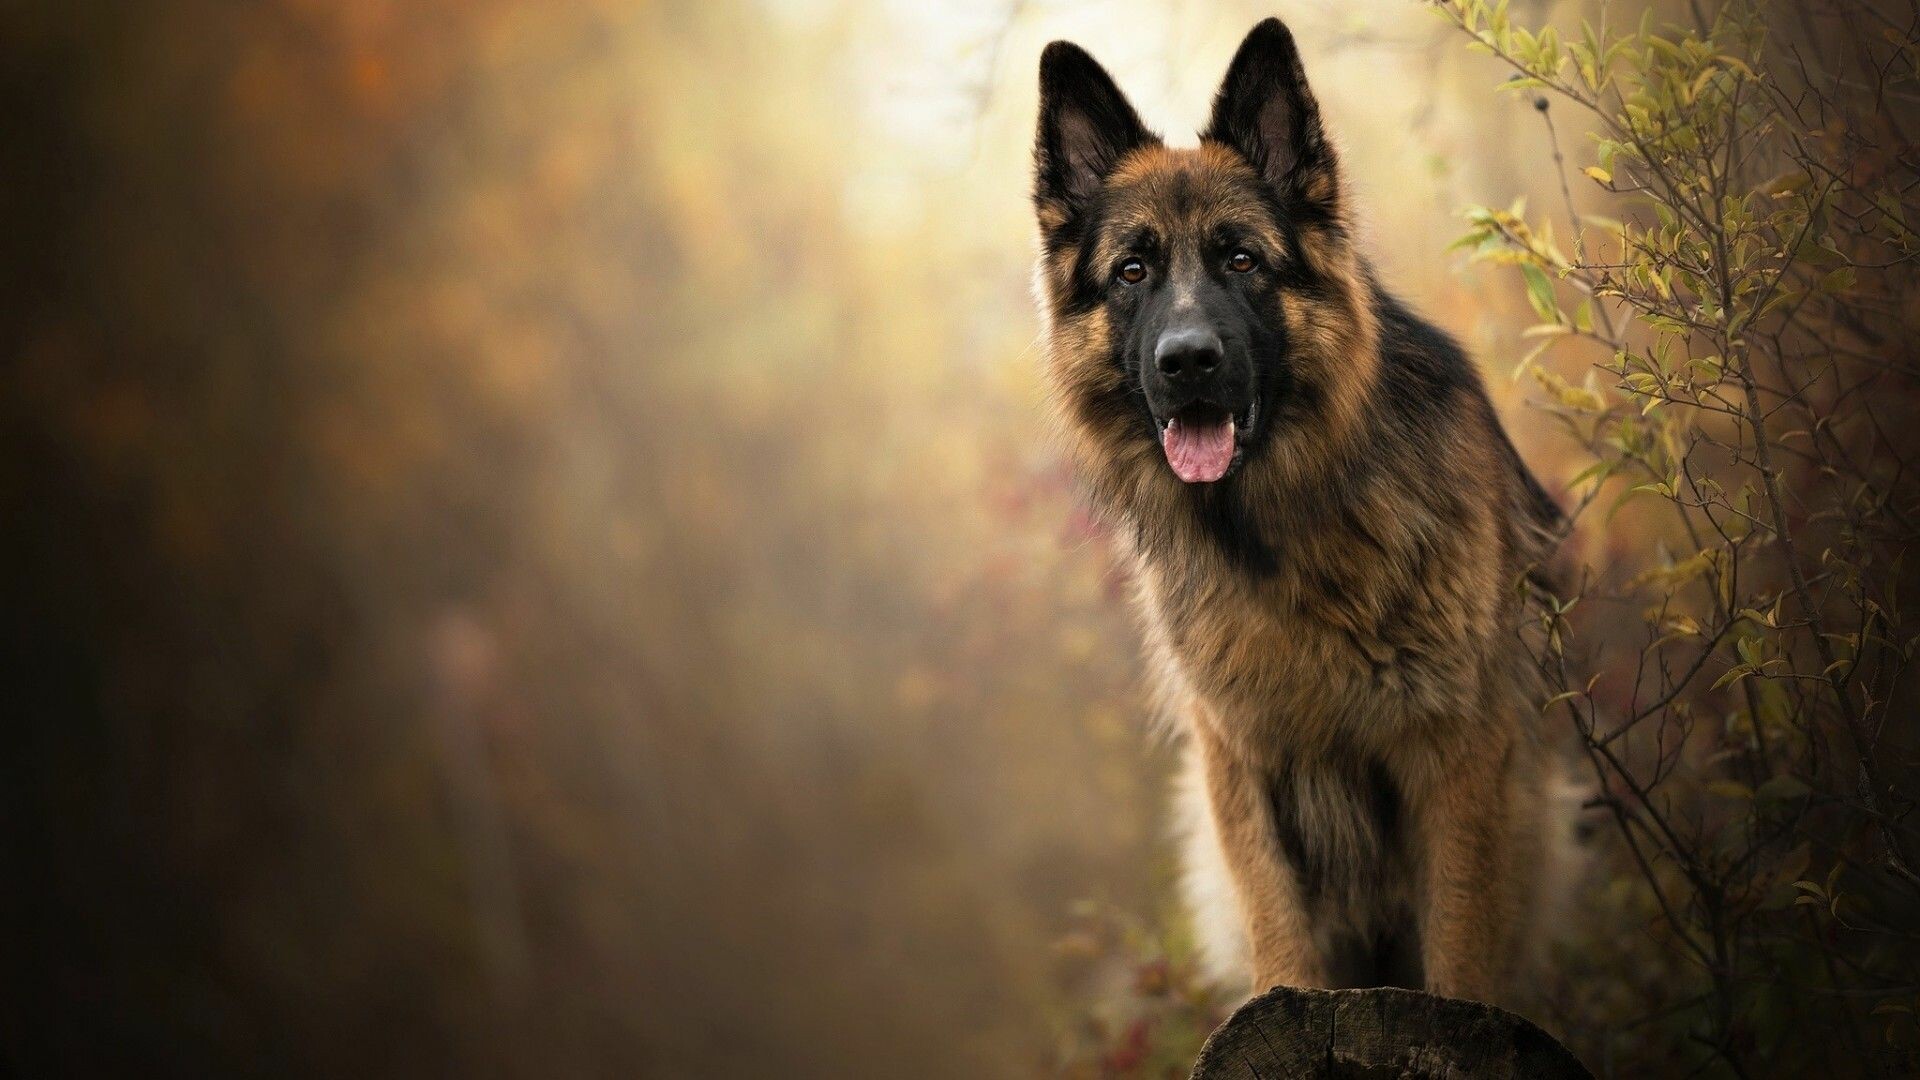 Dog: German Shepherd, Canis lupus familiaris. 1920x1080 Full HD Wallpaper.